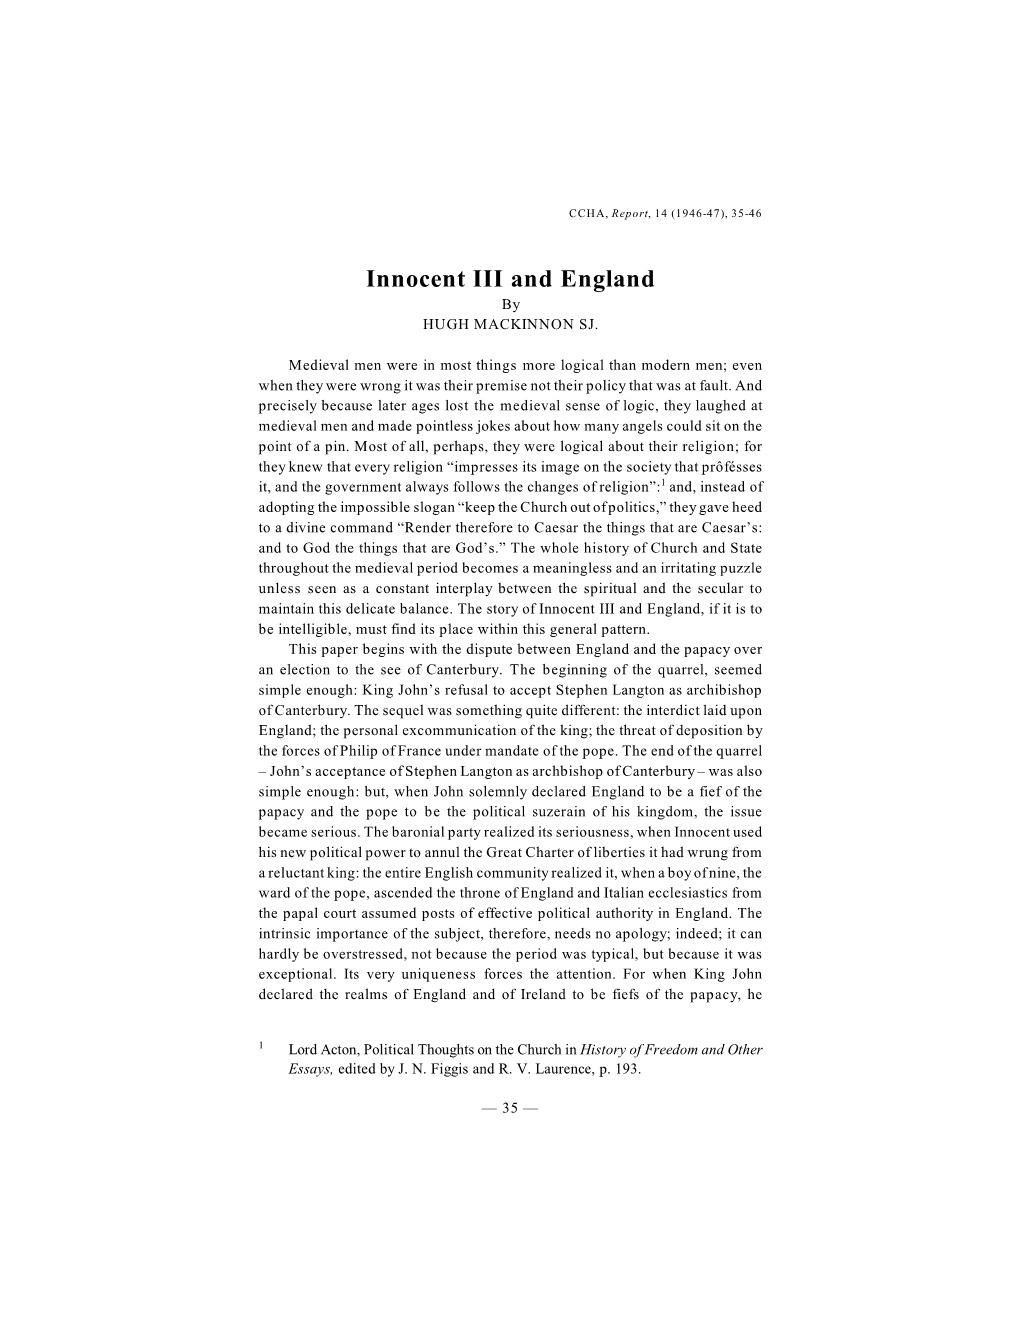 Innocent III and England by HUGH MACKINNON SJ